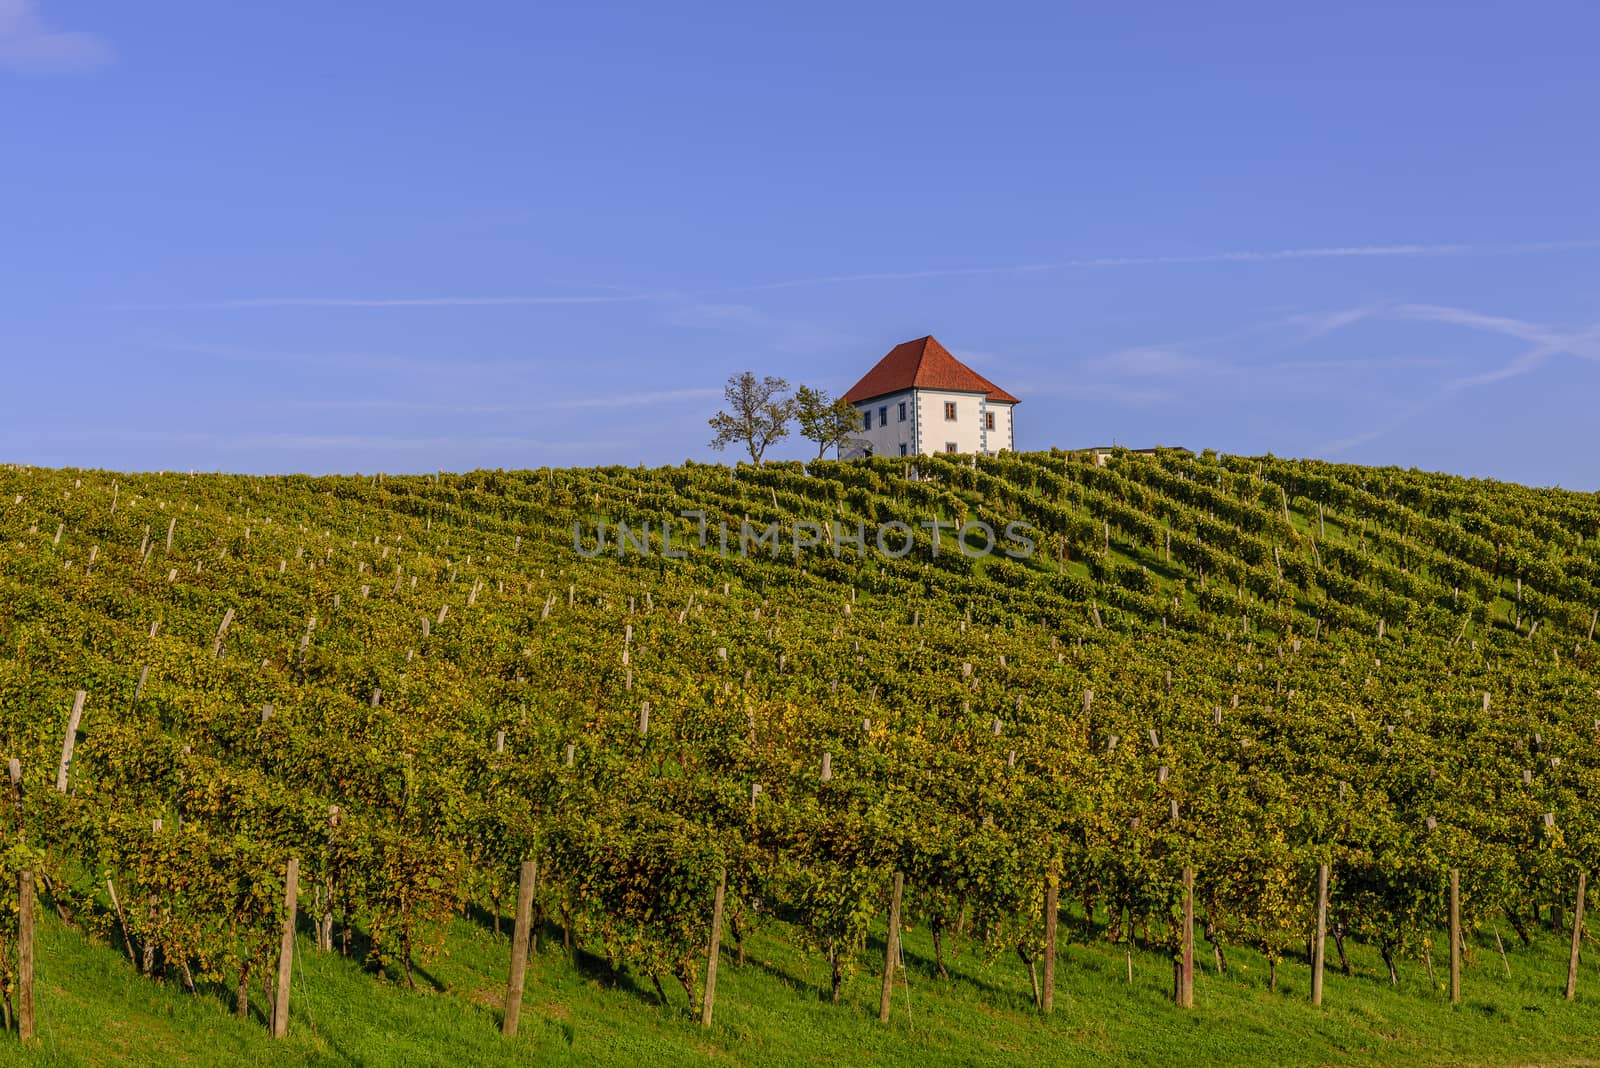 Winery Zlati gric, Slovenske Konjice, Slovenia, tourism and wine